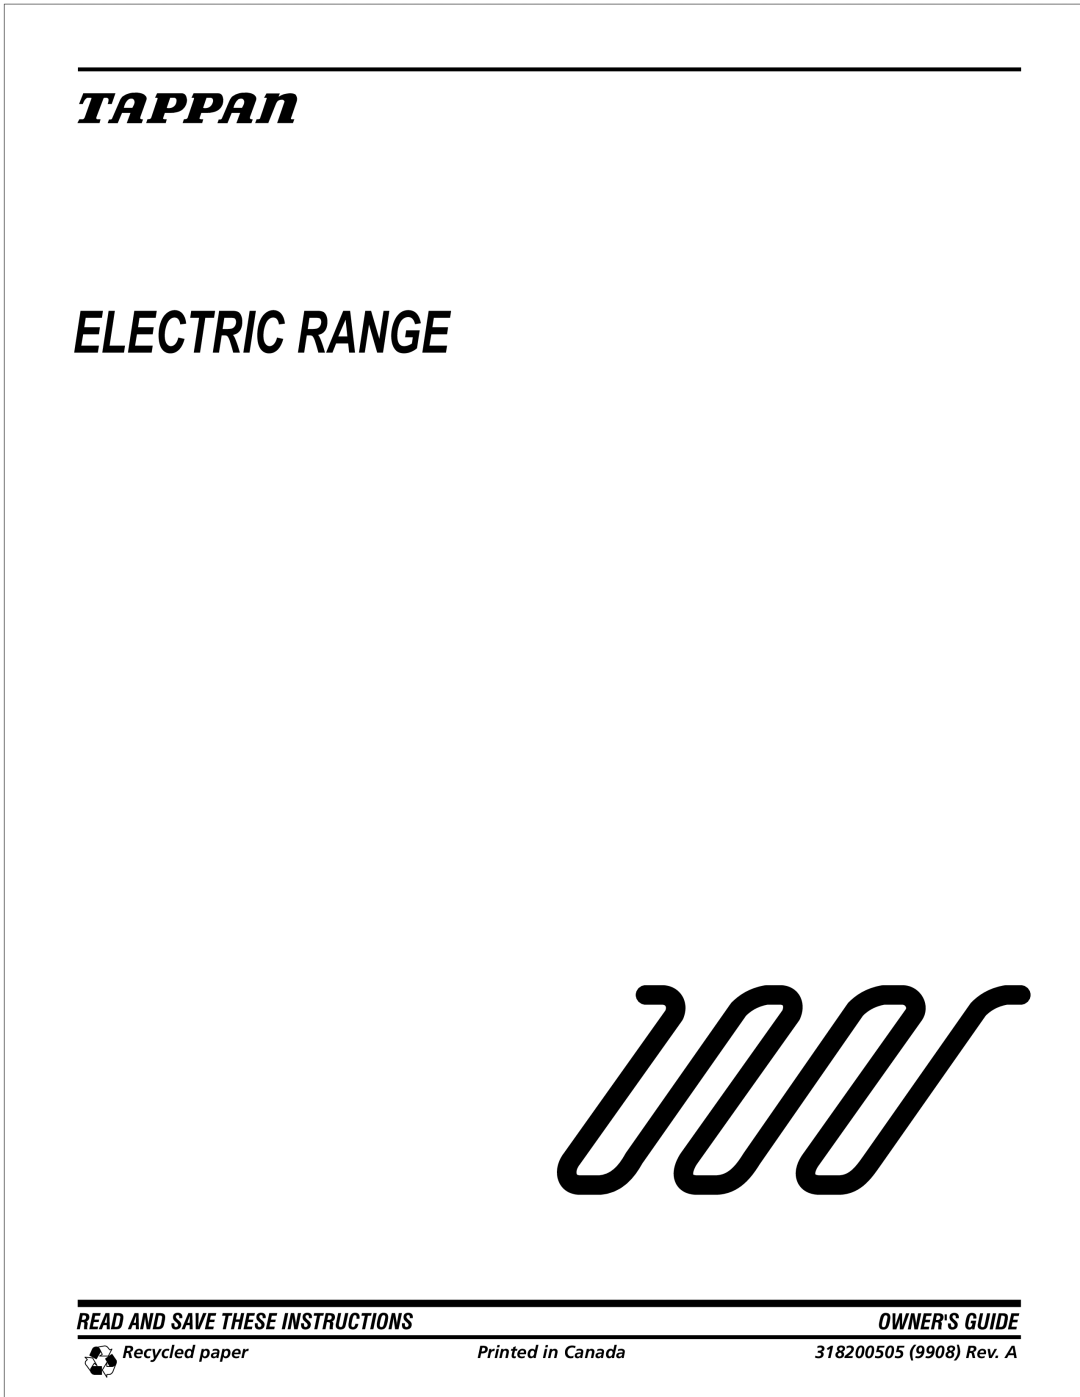 Tappan manual Recycled paper, 318200505 9908 Rev. A, Electric Range 